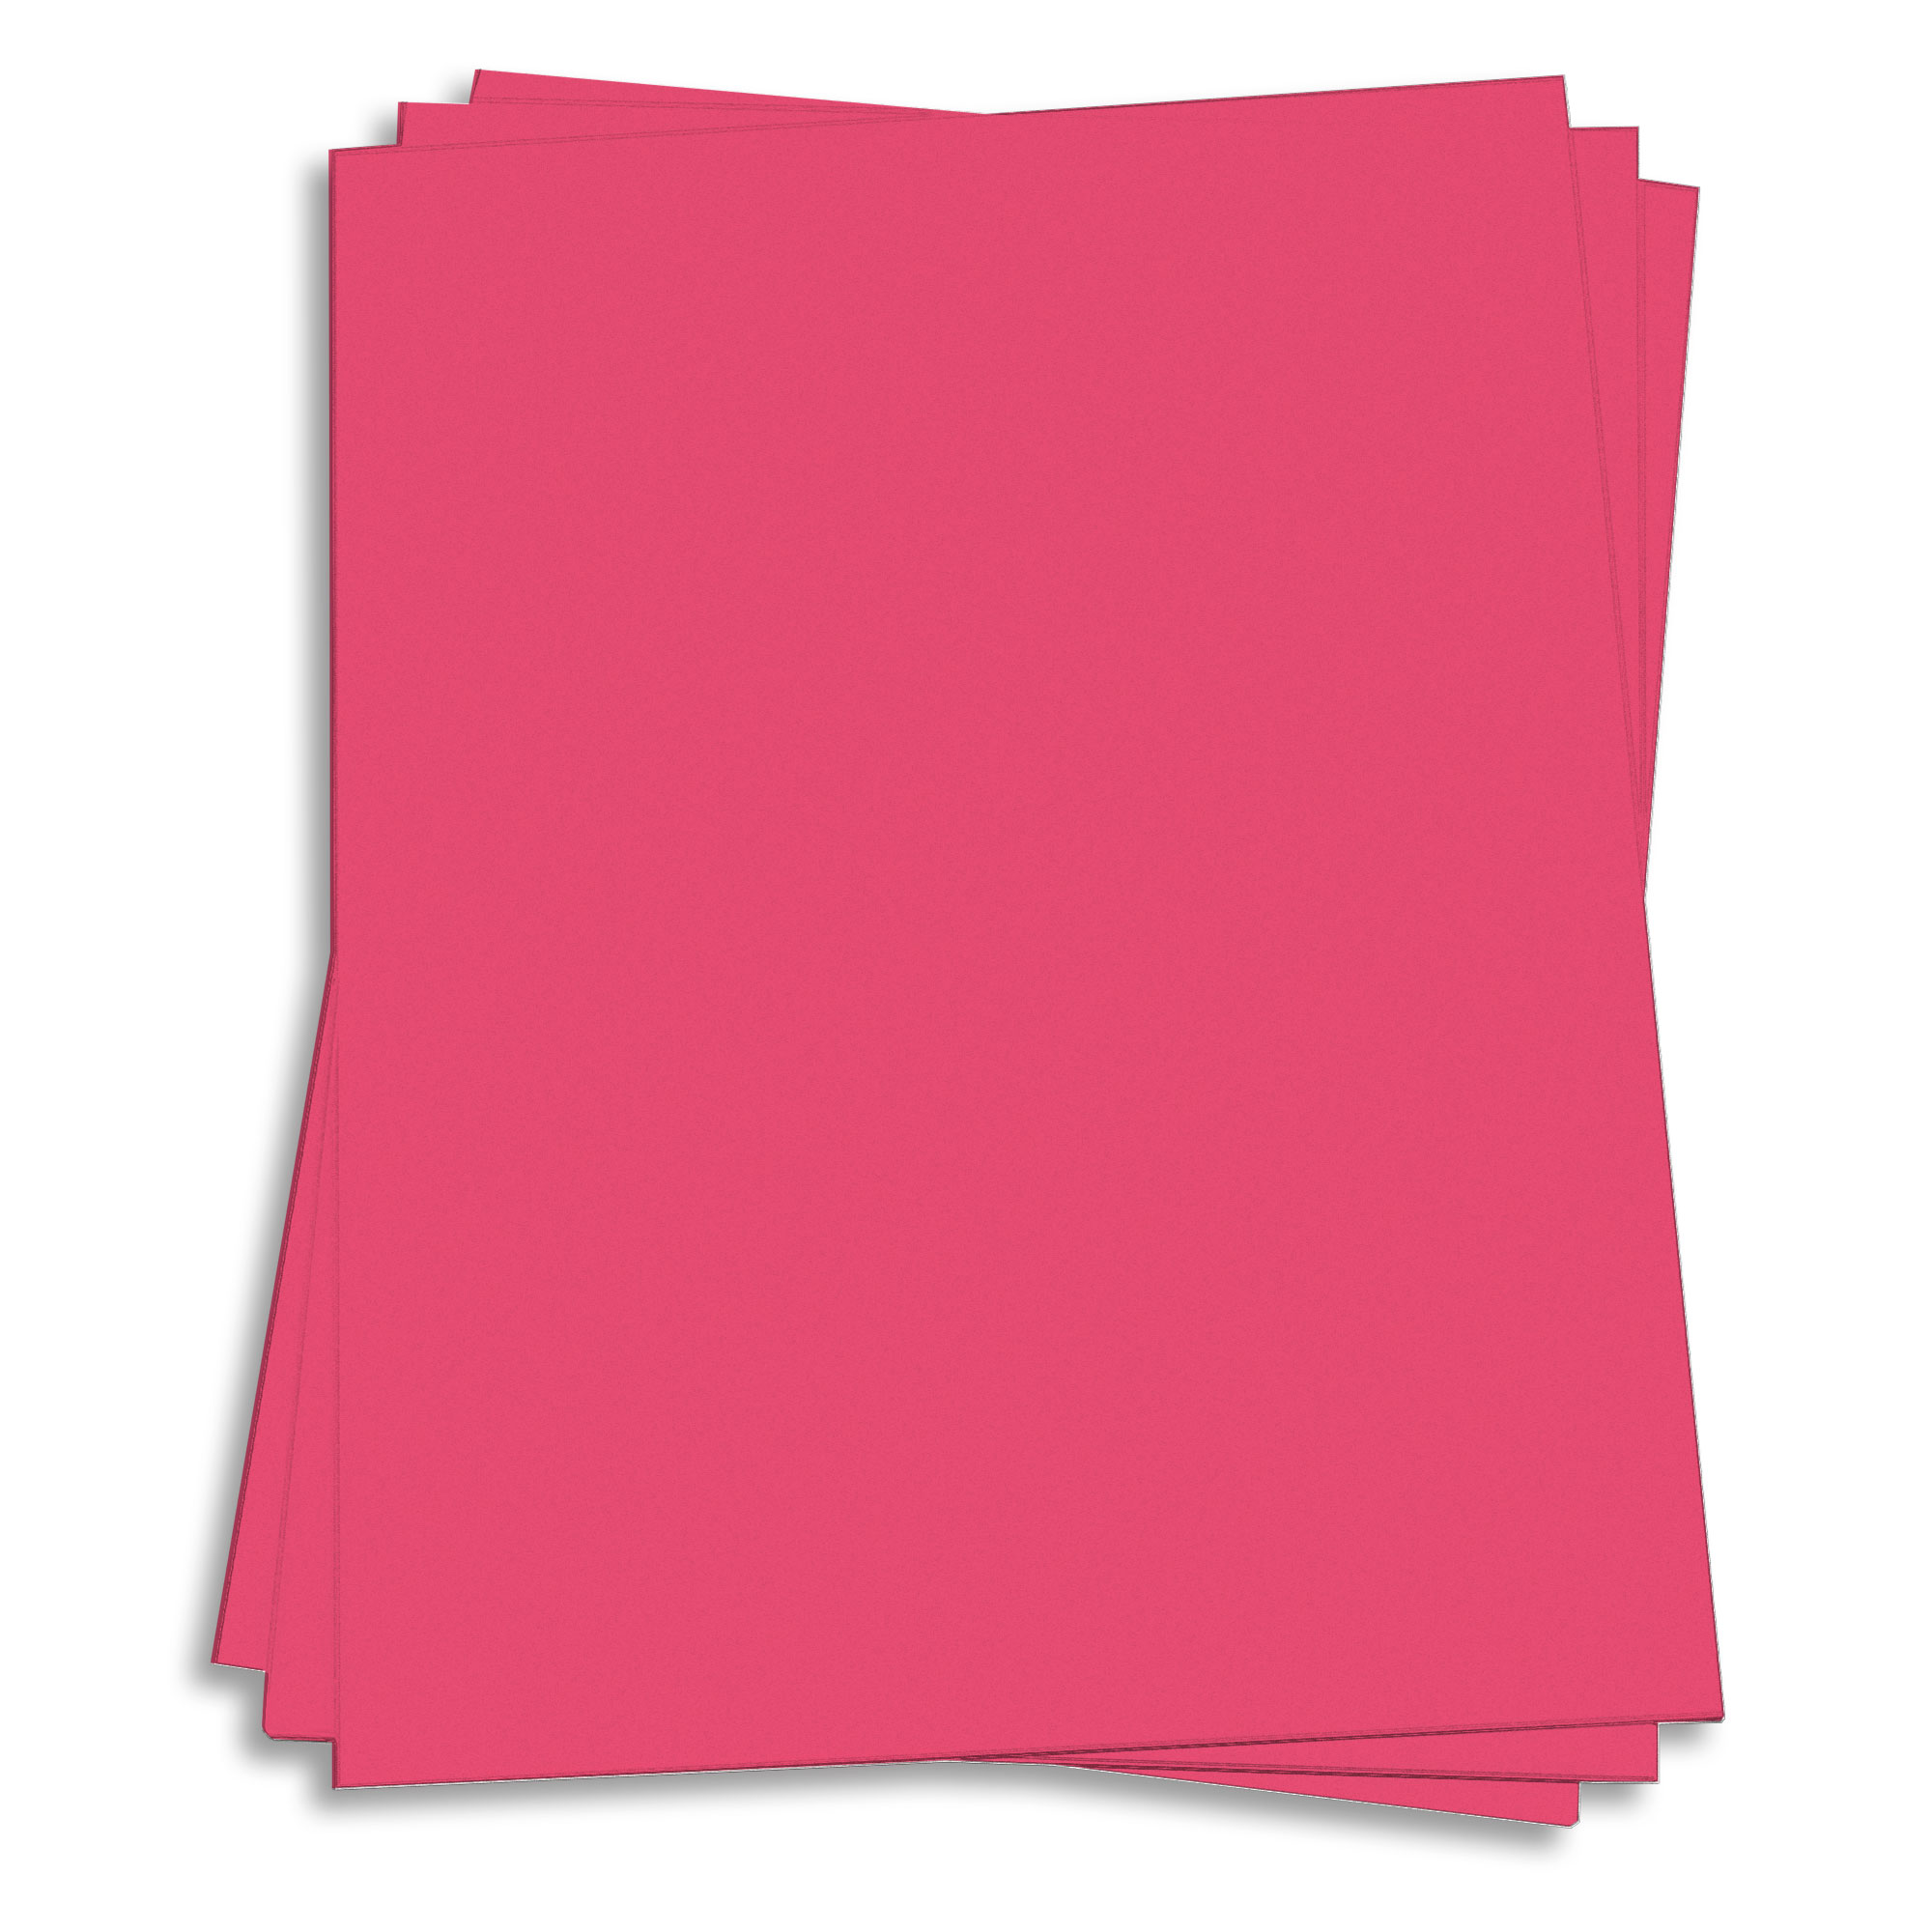 Plasma Pink Card Stock - 8 1/2 x 11 65lb Cover